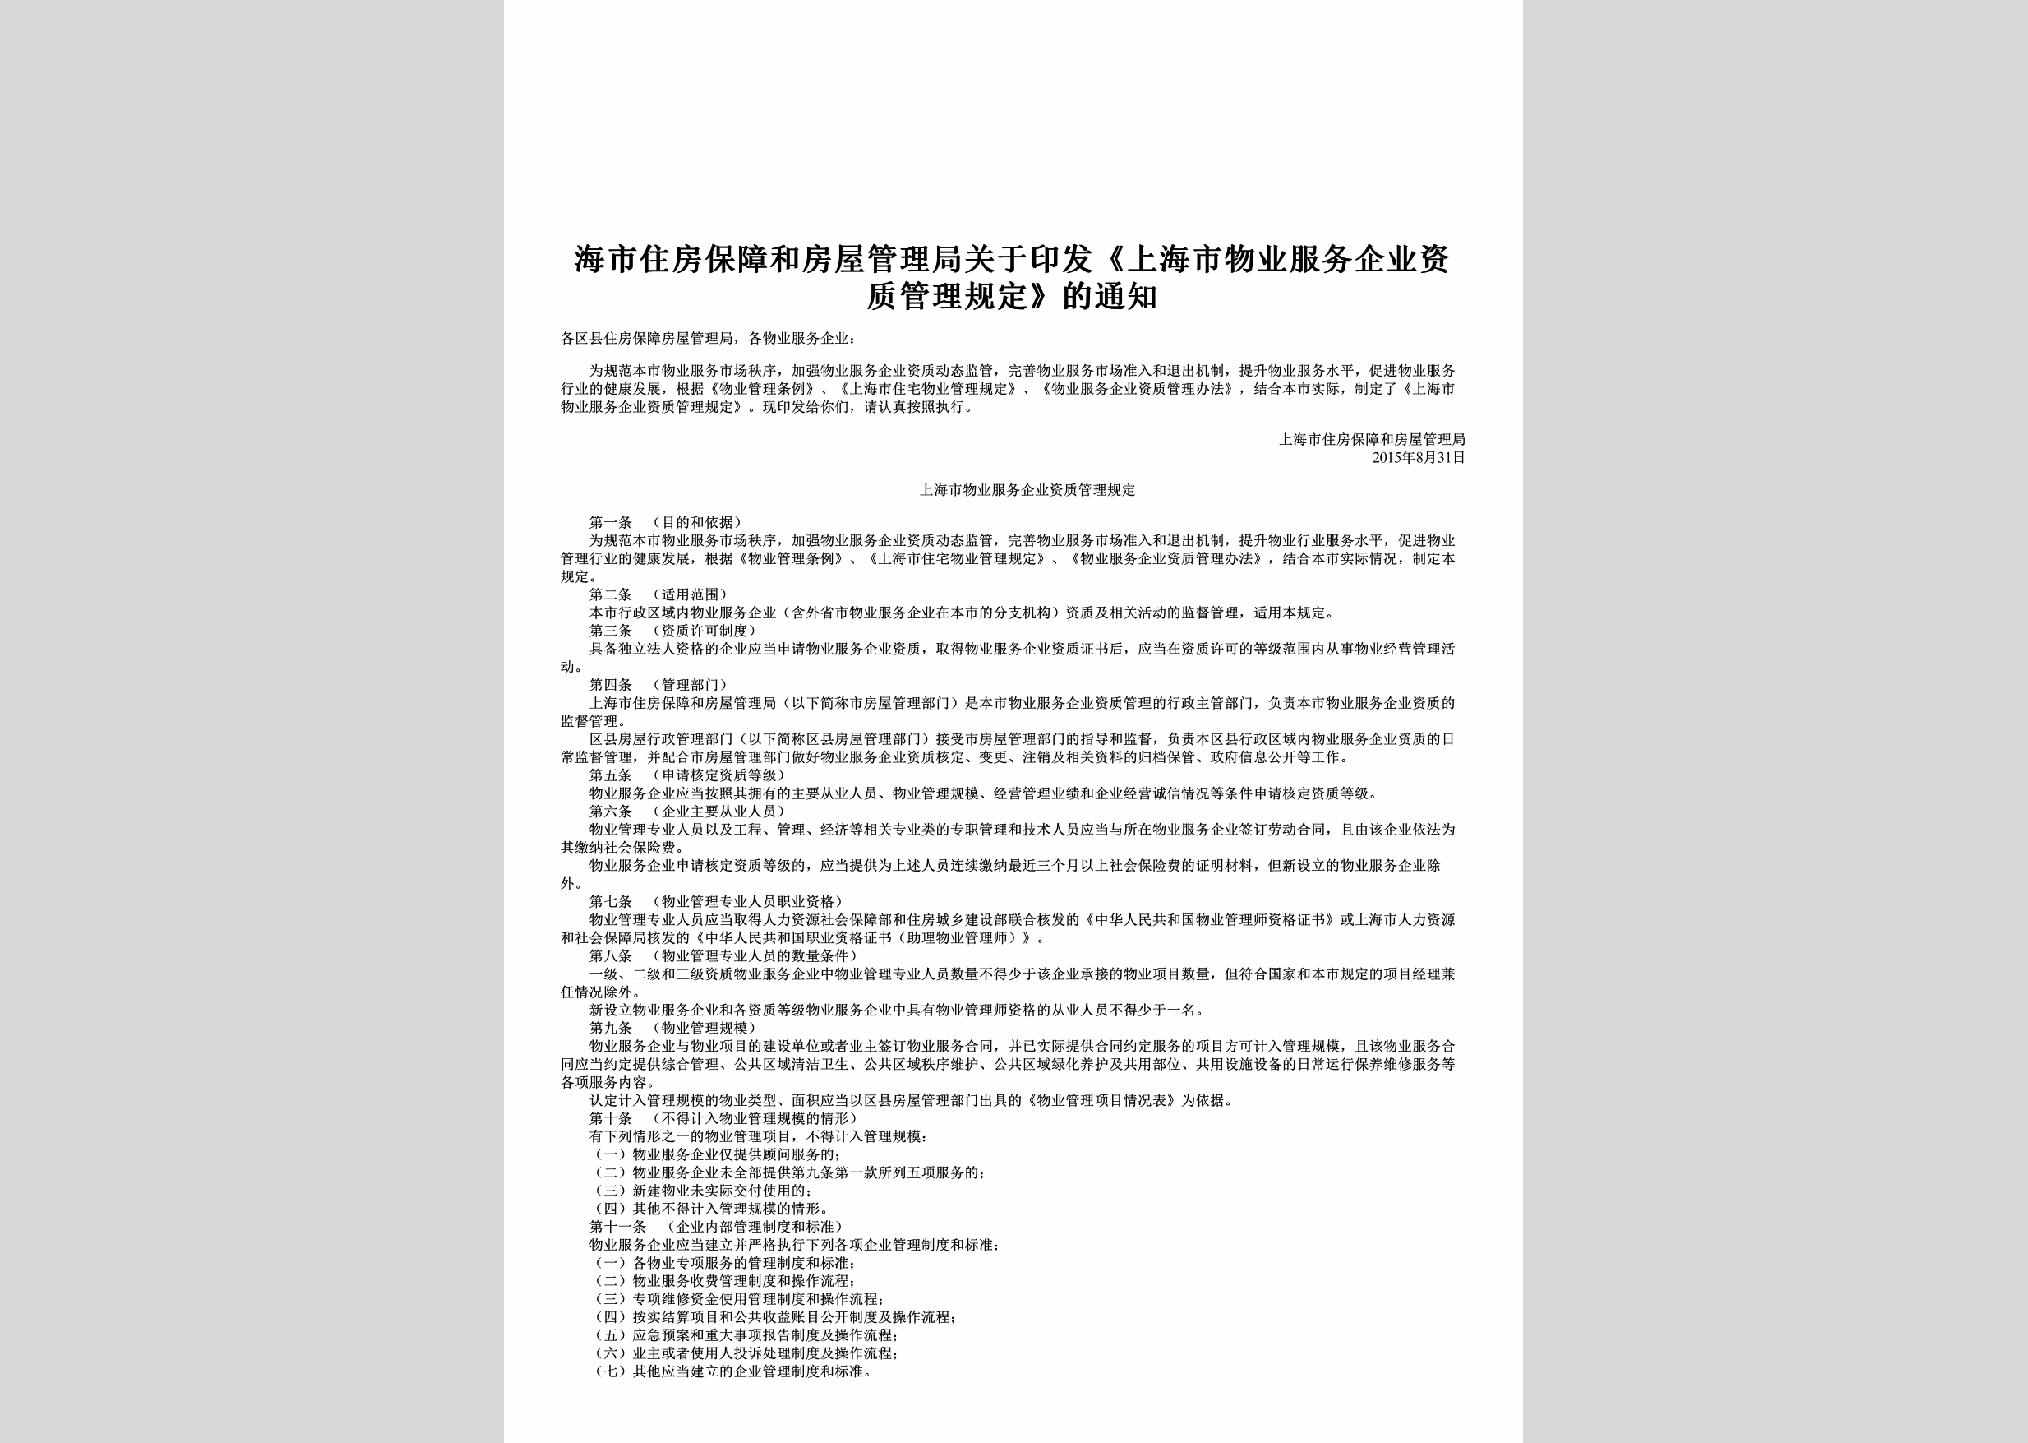 SH-WYFWZZGL-2015：关于印发《上海市物业服务企业资质管理规定》的通知